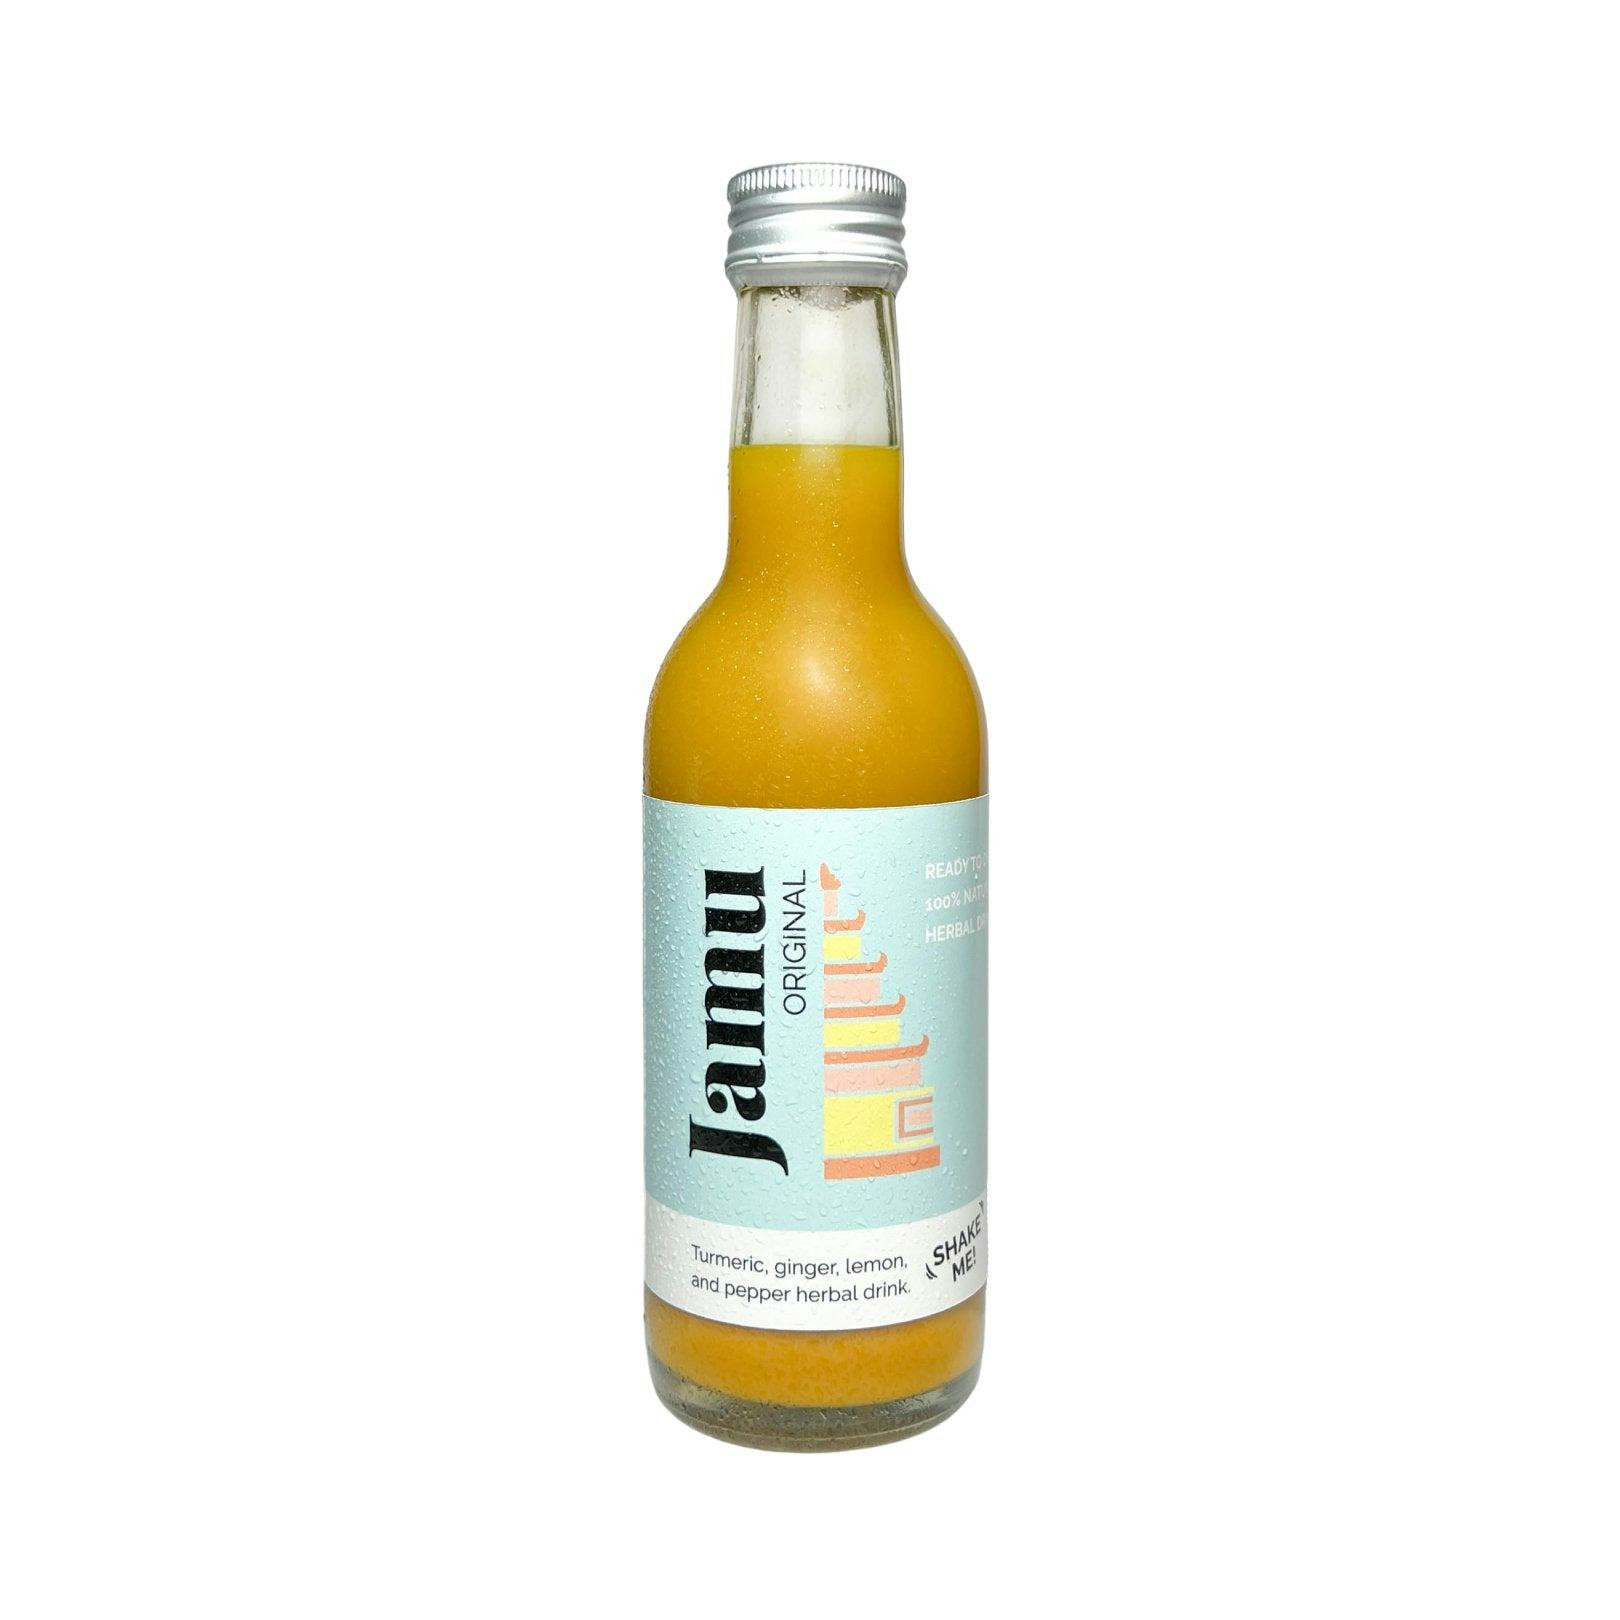 Jamu Original, Curcuma drink, prodotto artigianale per la vendita diretta in Svizzera